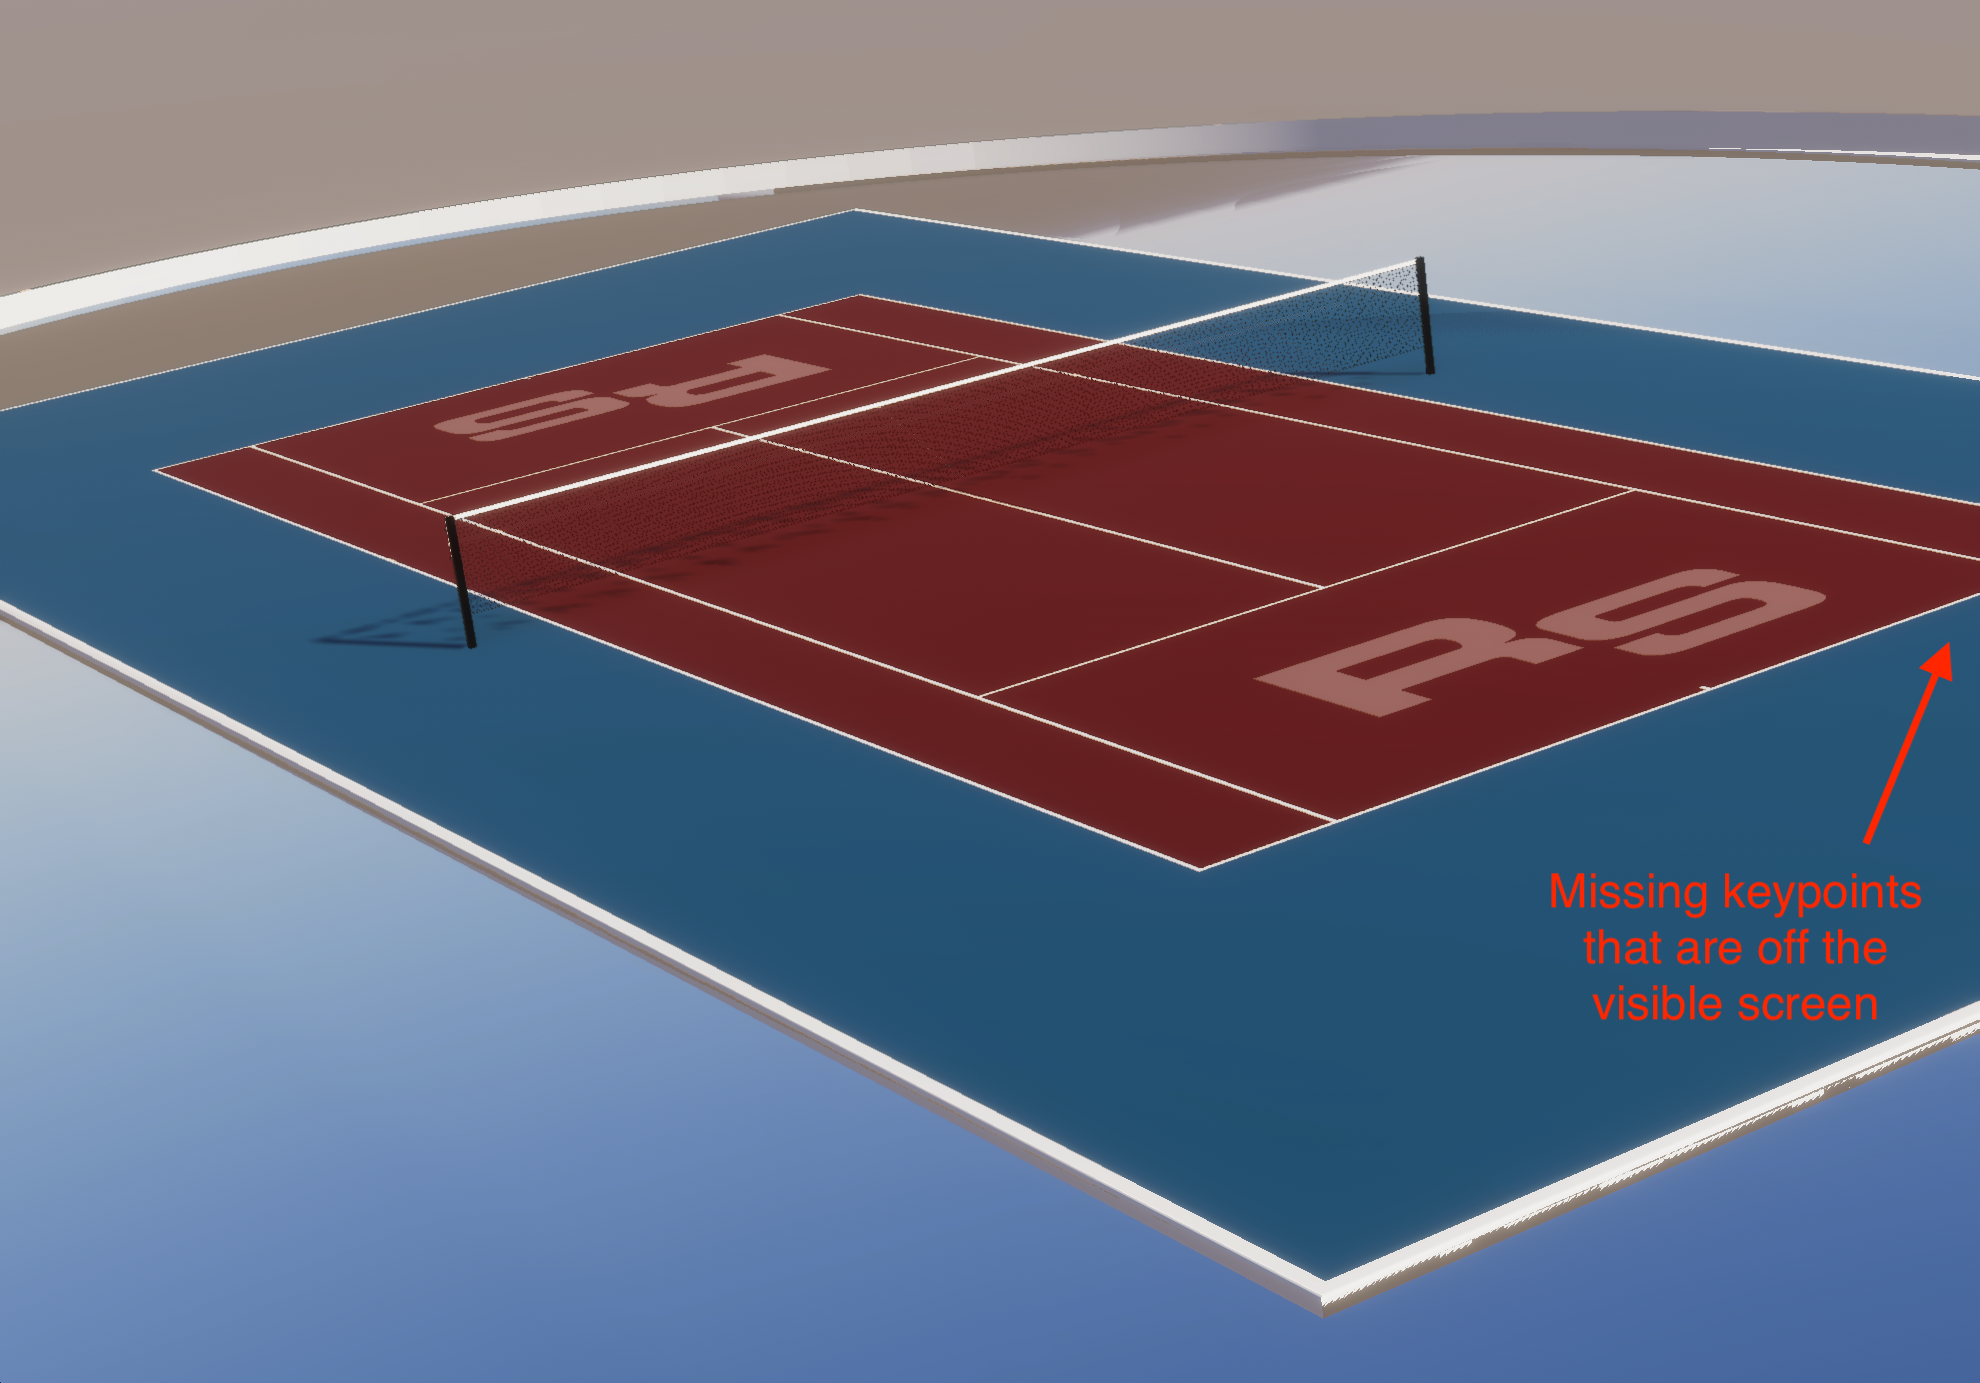 Tennis court line detector: Part 3, detecting non-visible keypoints